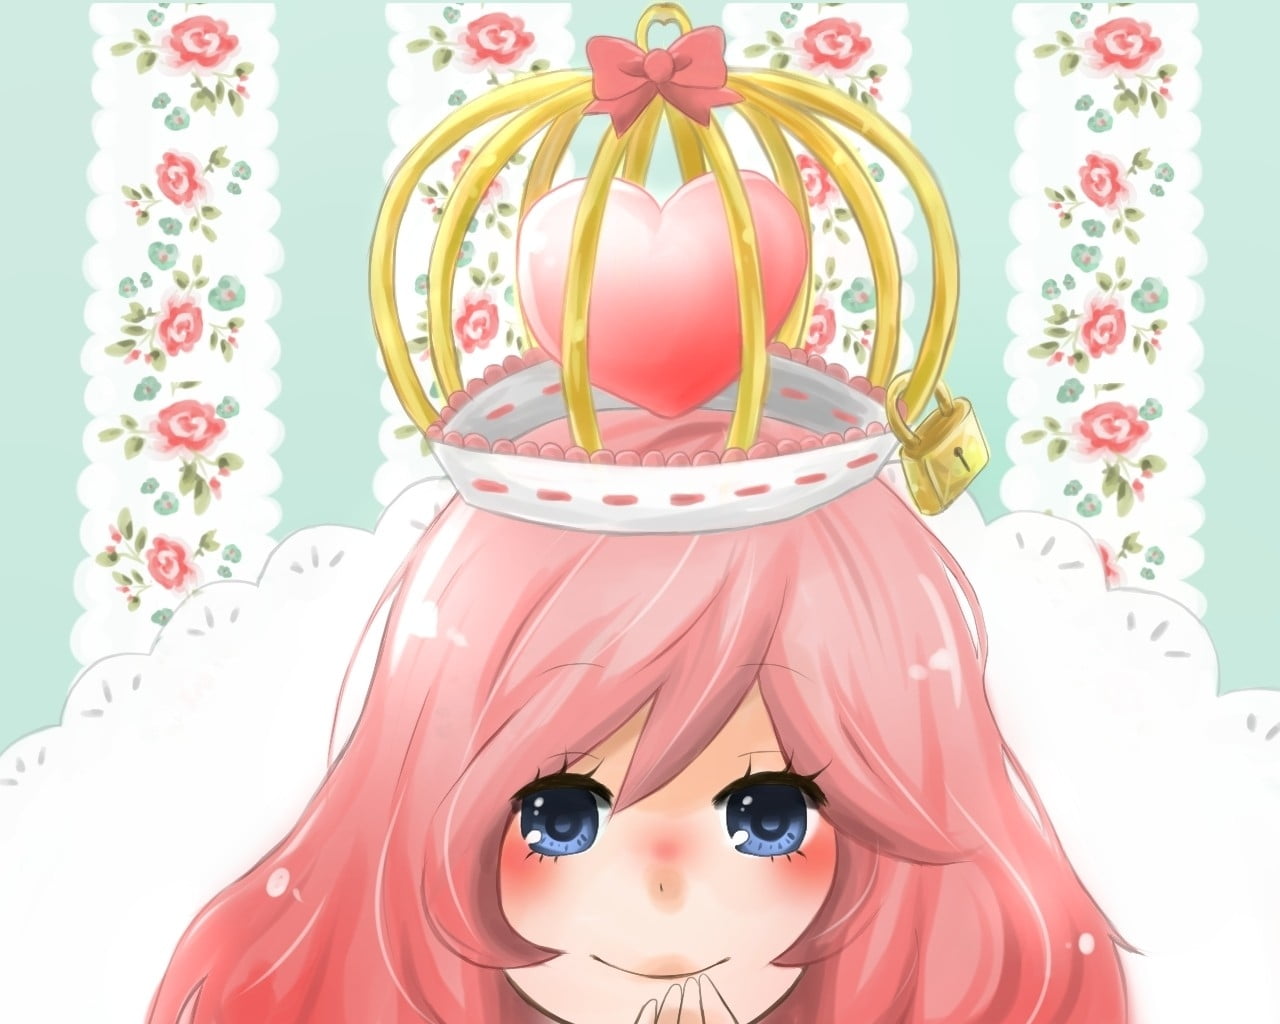 Anime Princess by Sunflower0007 on DeviantArt